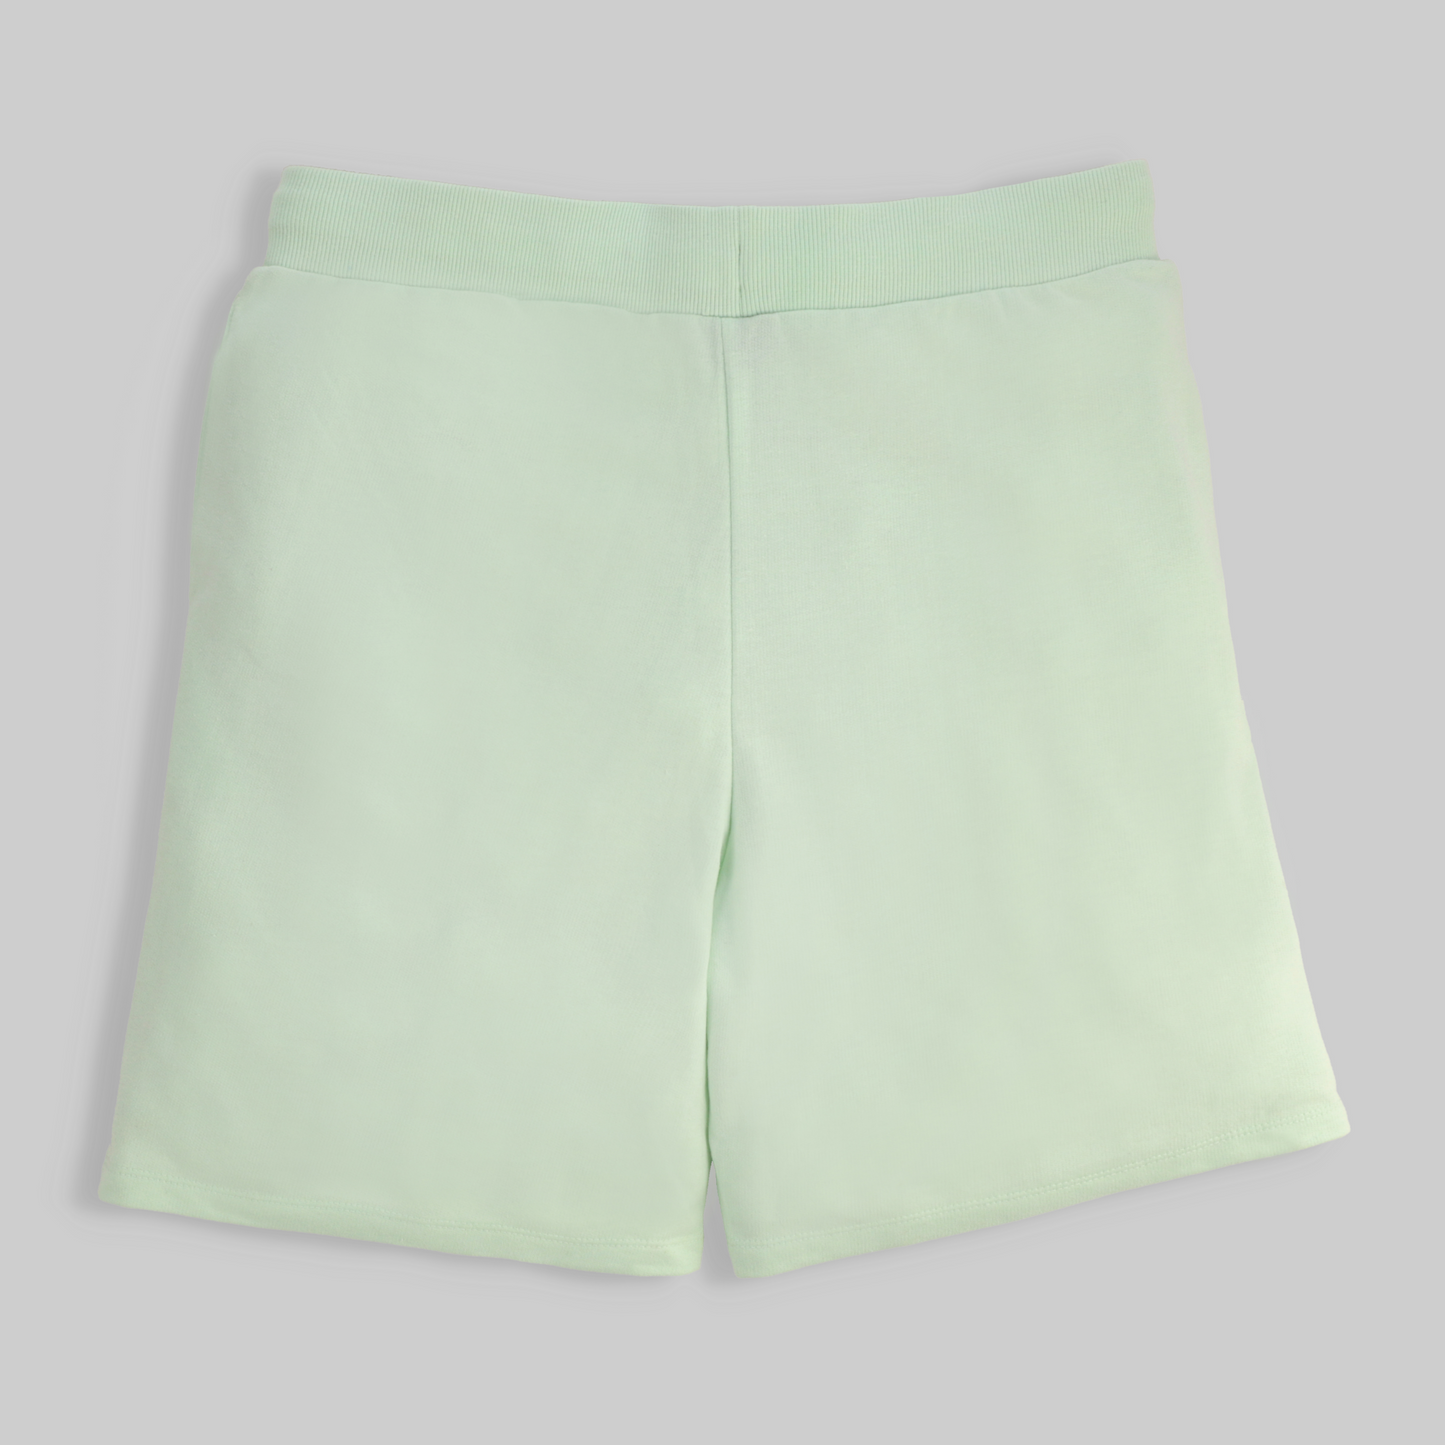 Embroidered Polarbear Shorts - Sage Green